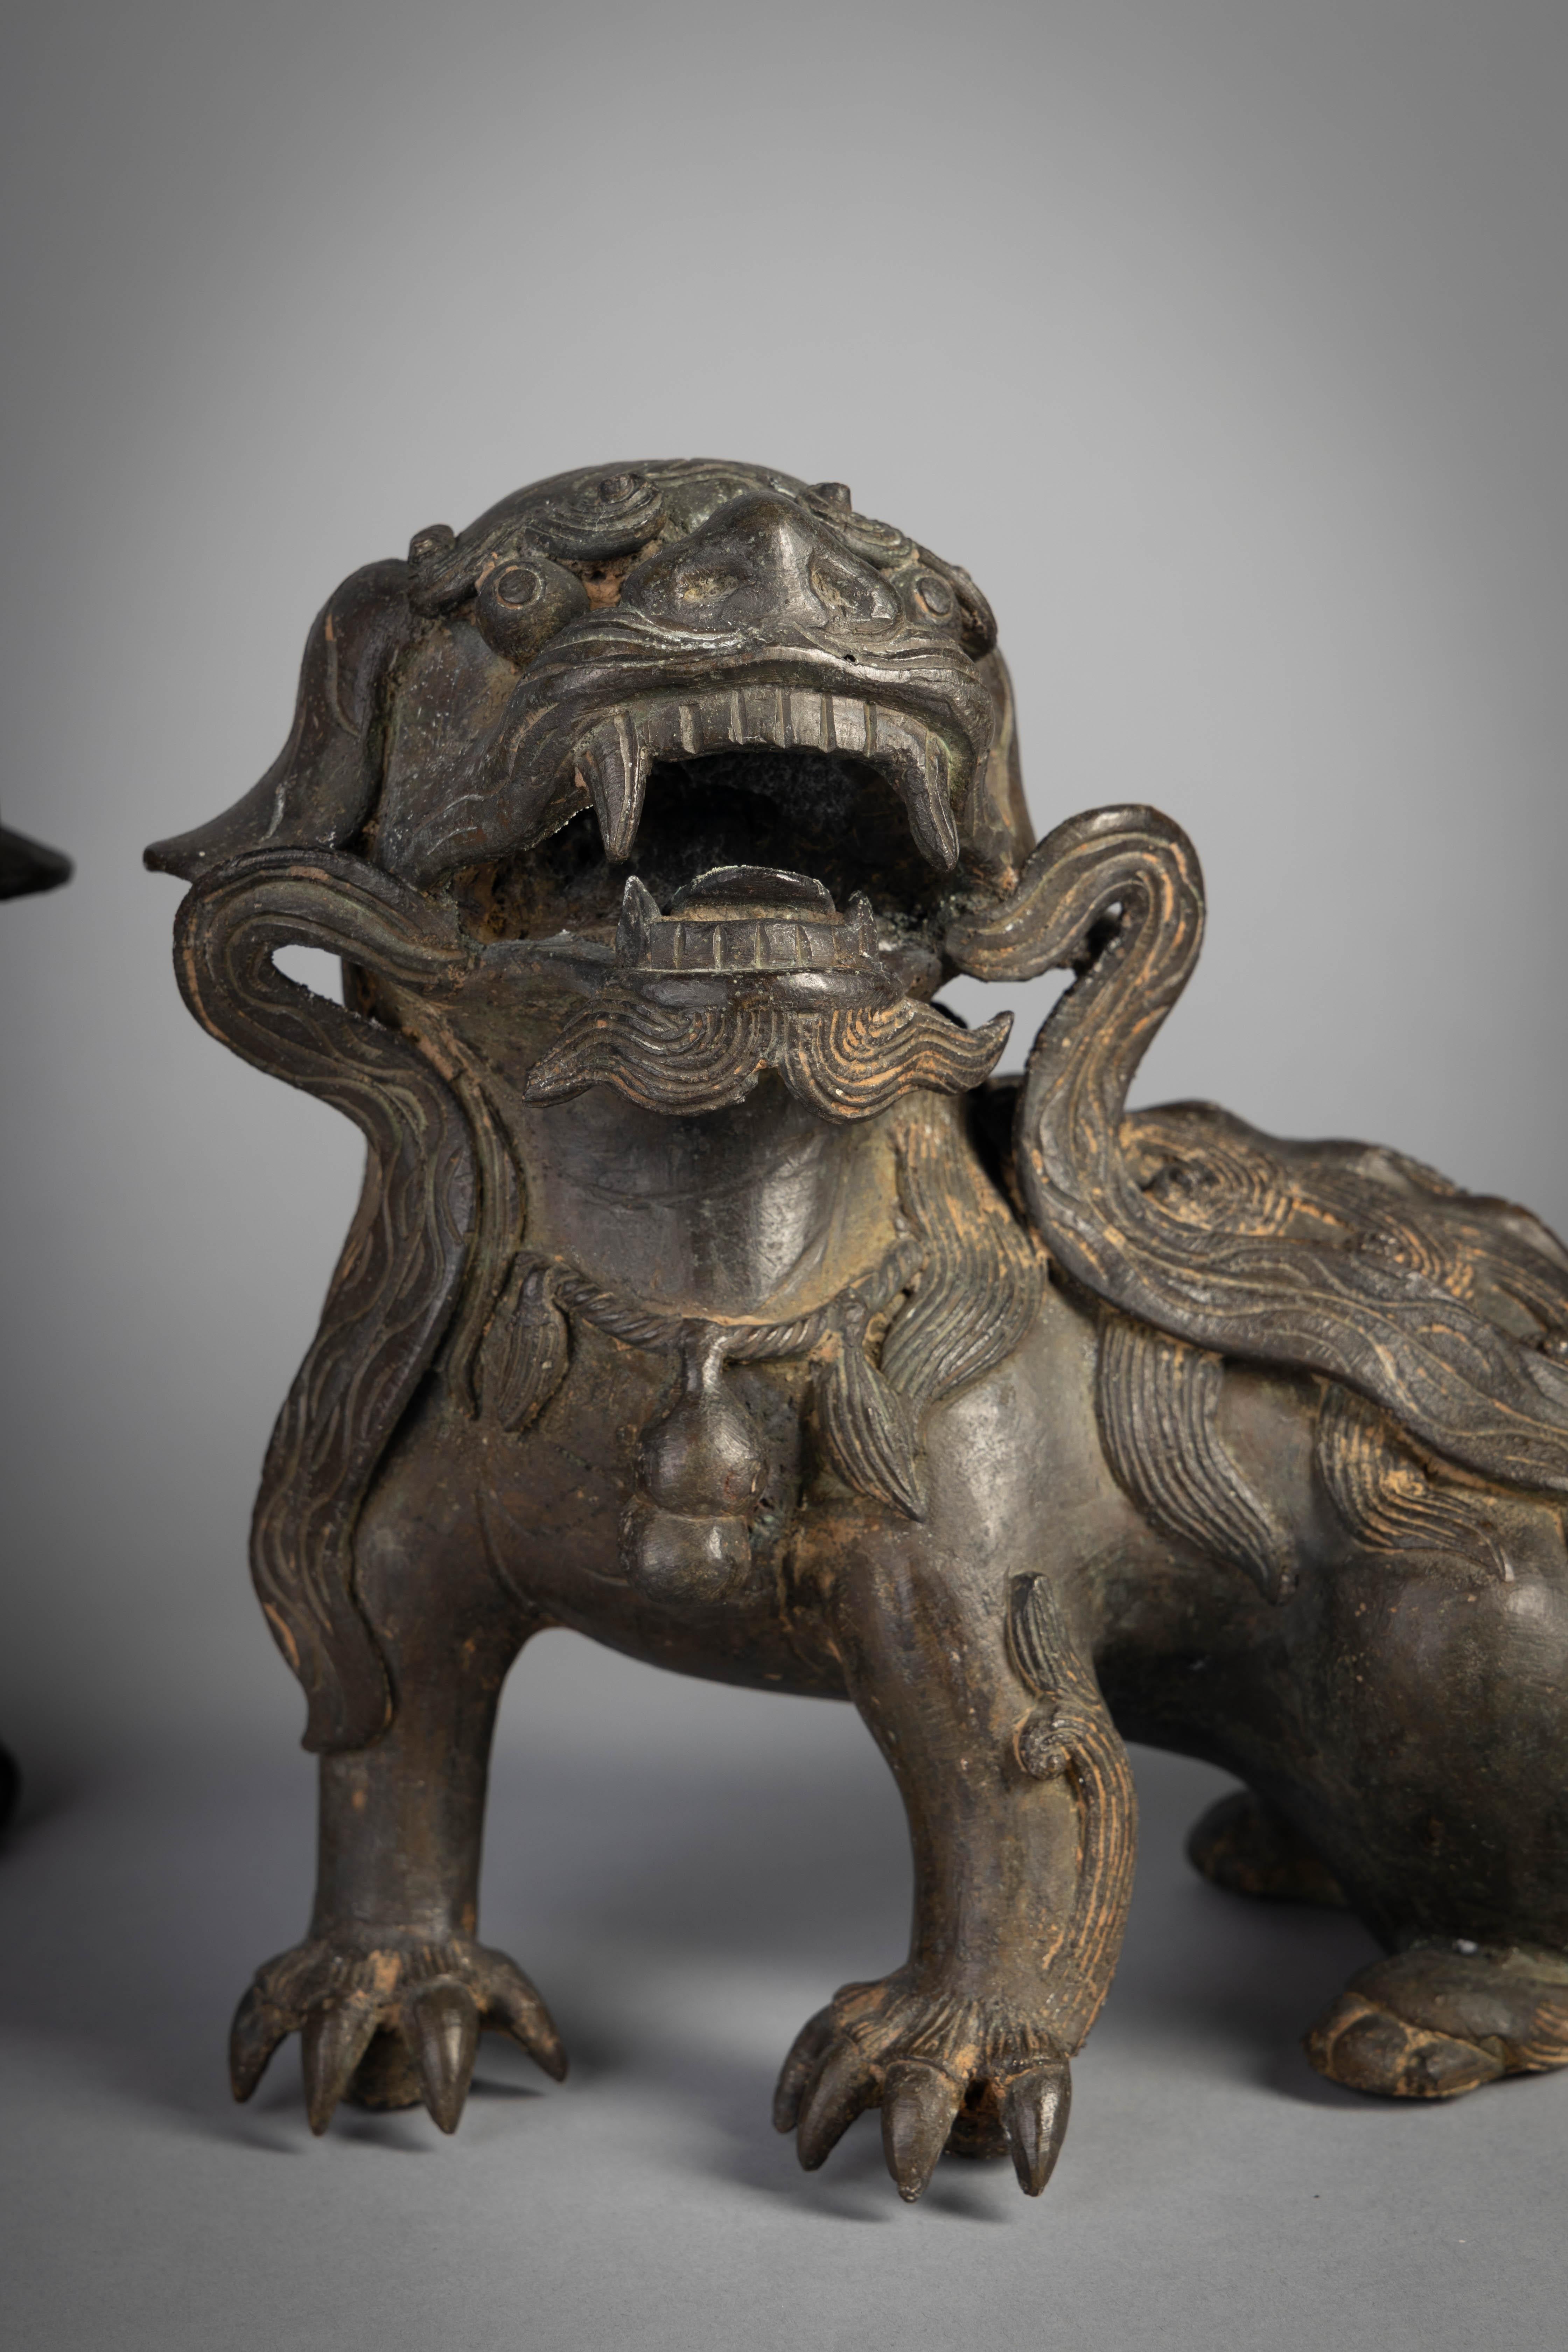 Pair of Chinese bronze Foo dogs, 19th century.